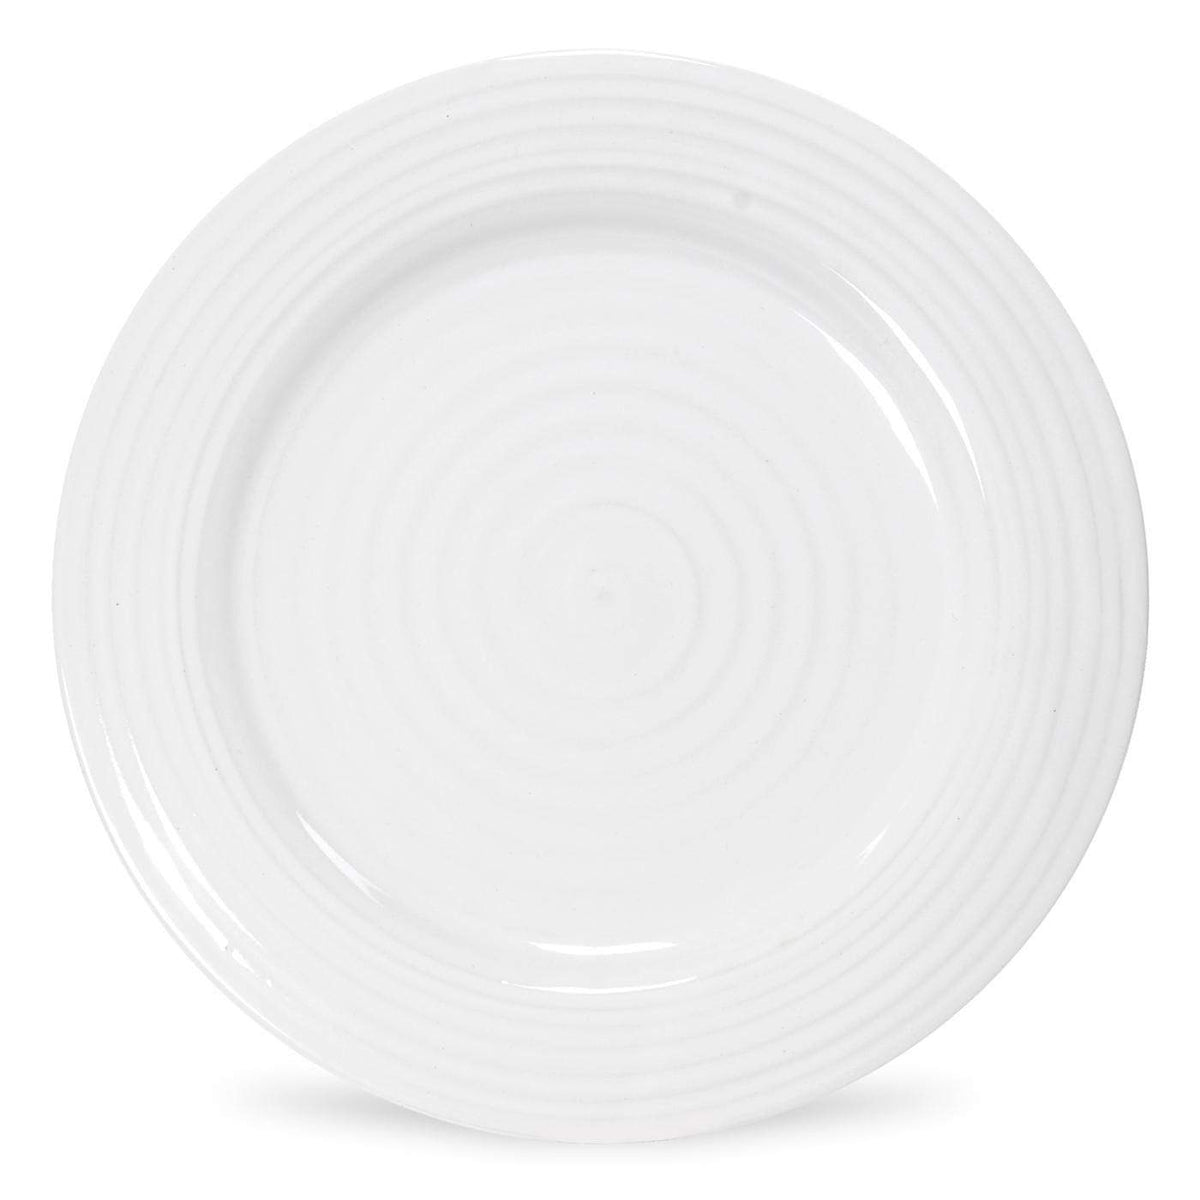 Sophie Conran for Portmeirion White Plate Set of 4 - SAK Home